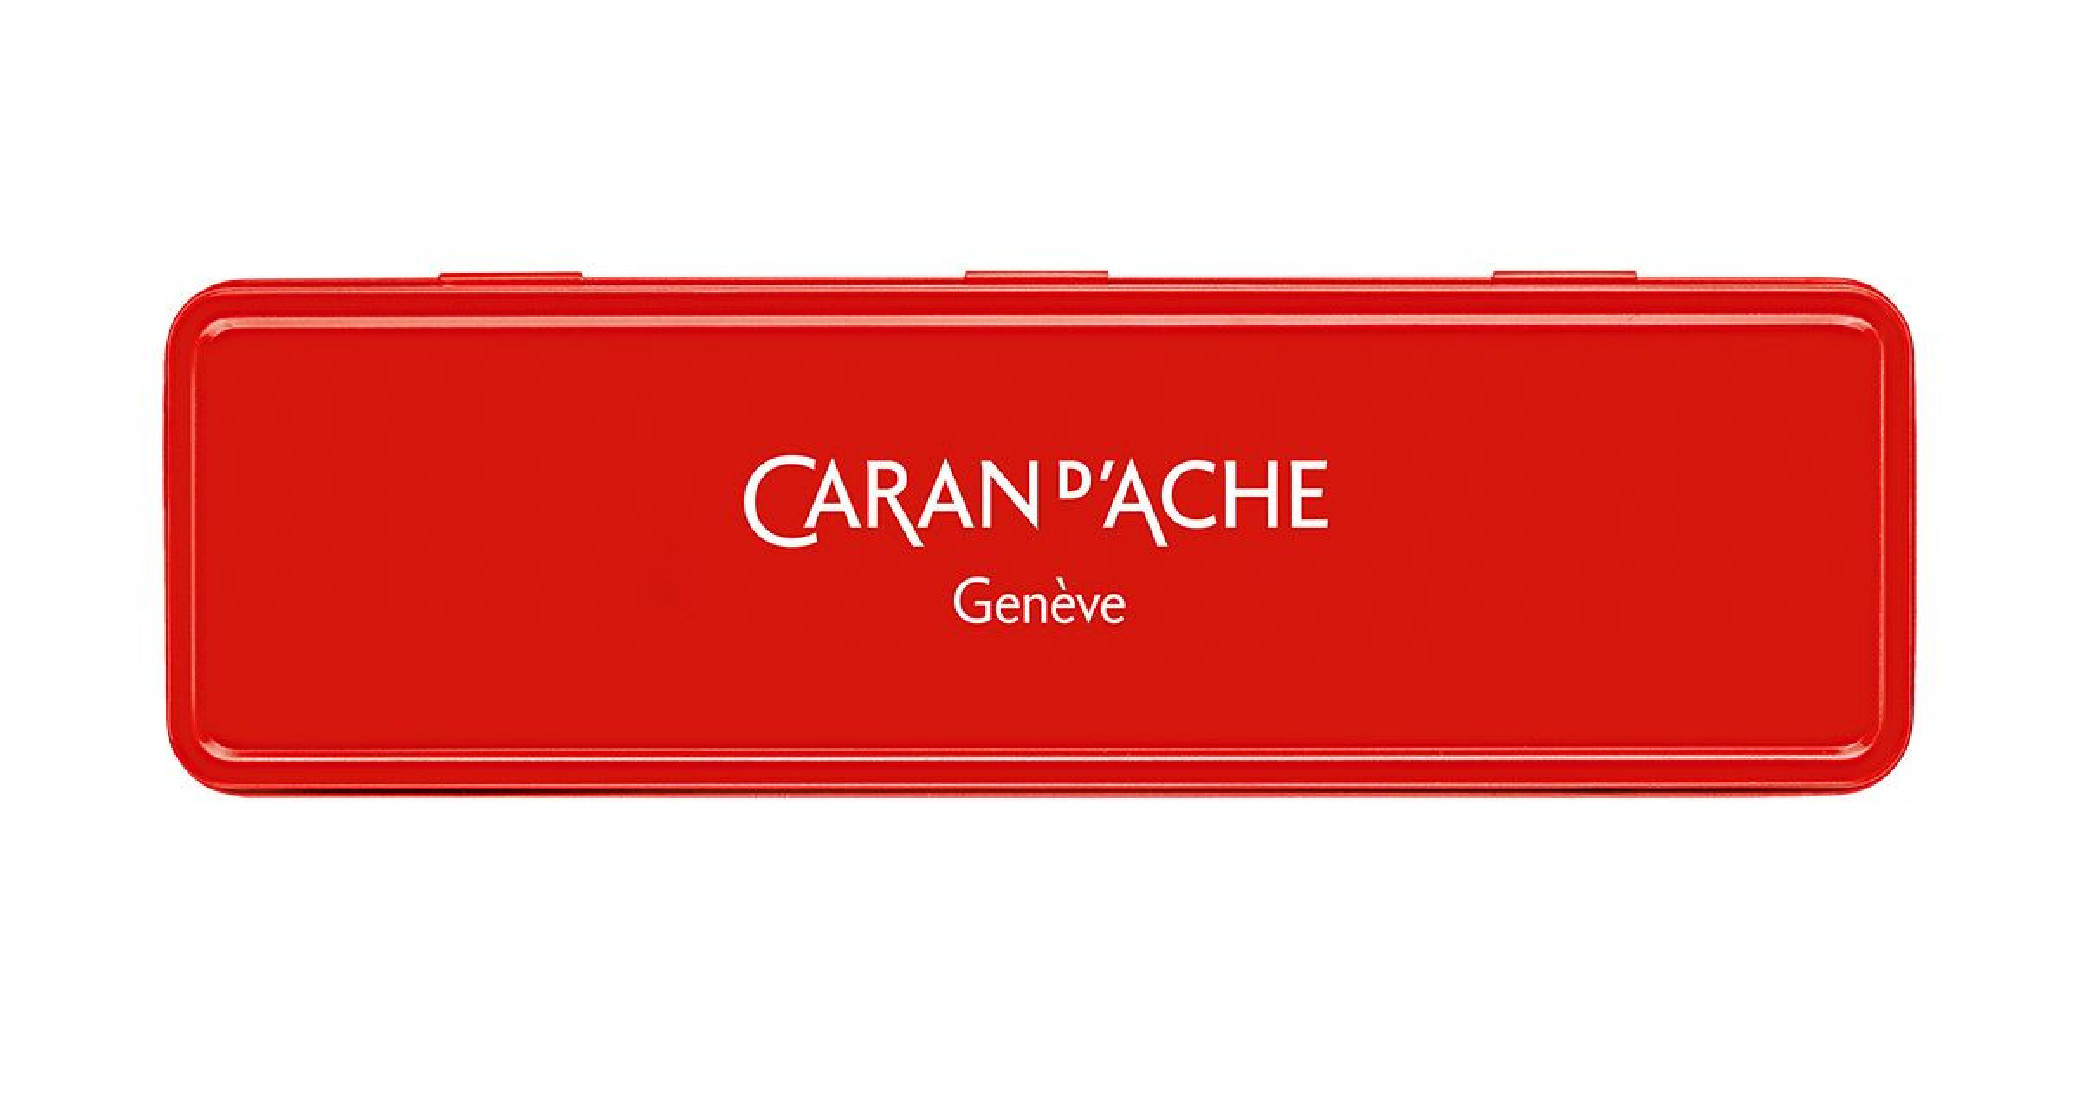 Caran dache Box of 12 Bicolor Coloured Pencils PRISMALO WONDER FOREST  Limited Edition